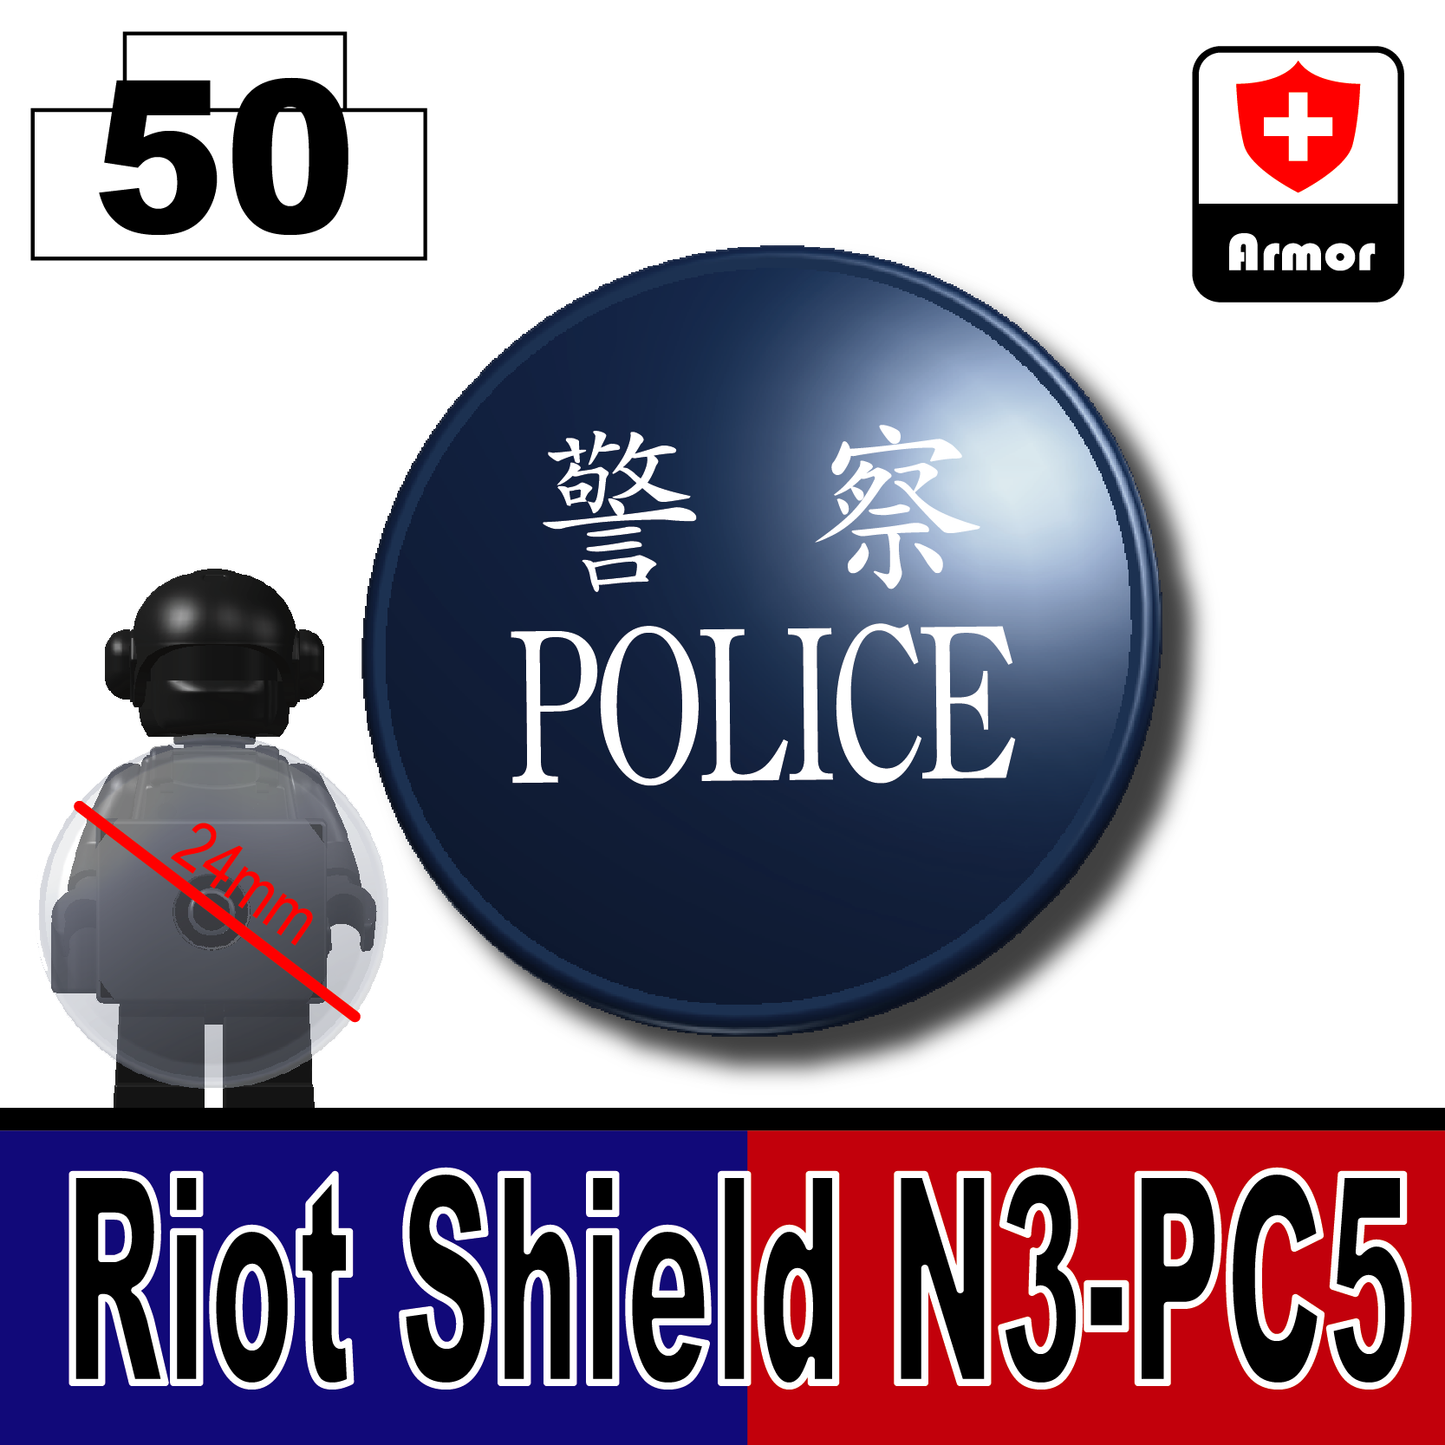 Riot Shield N3